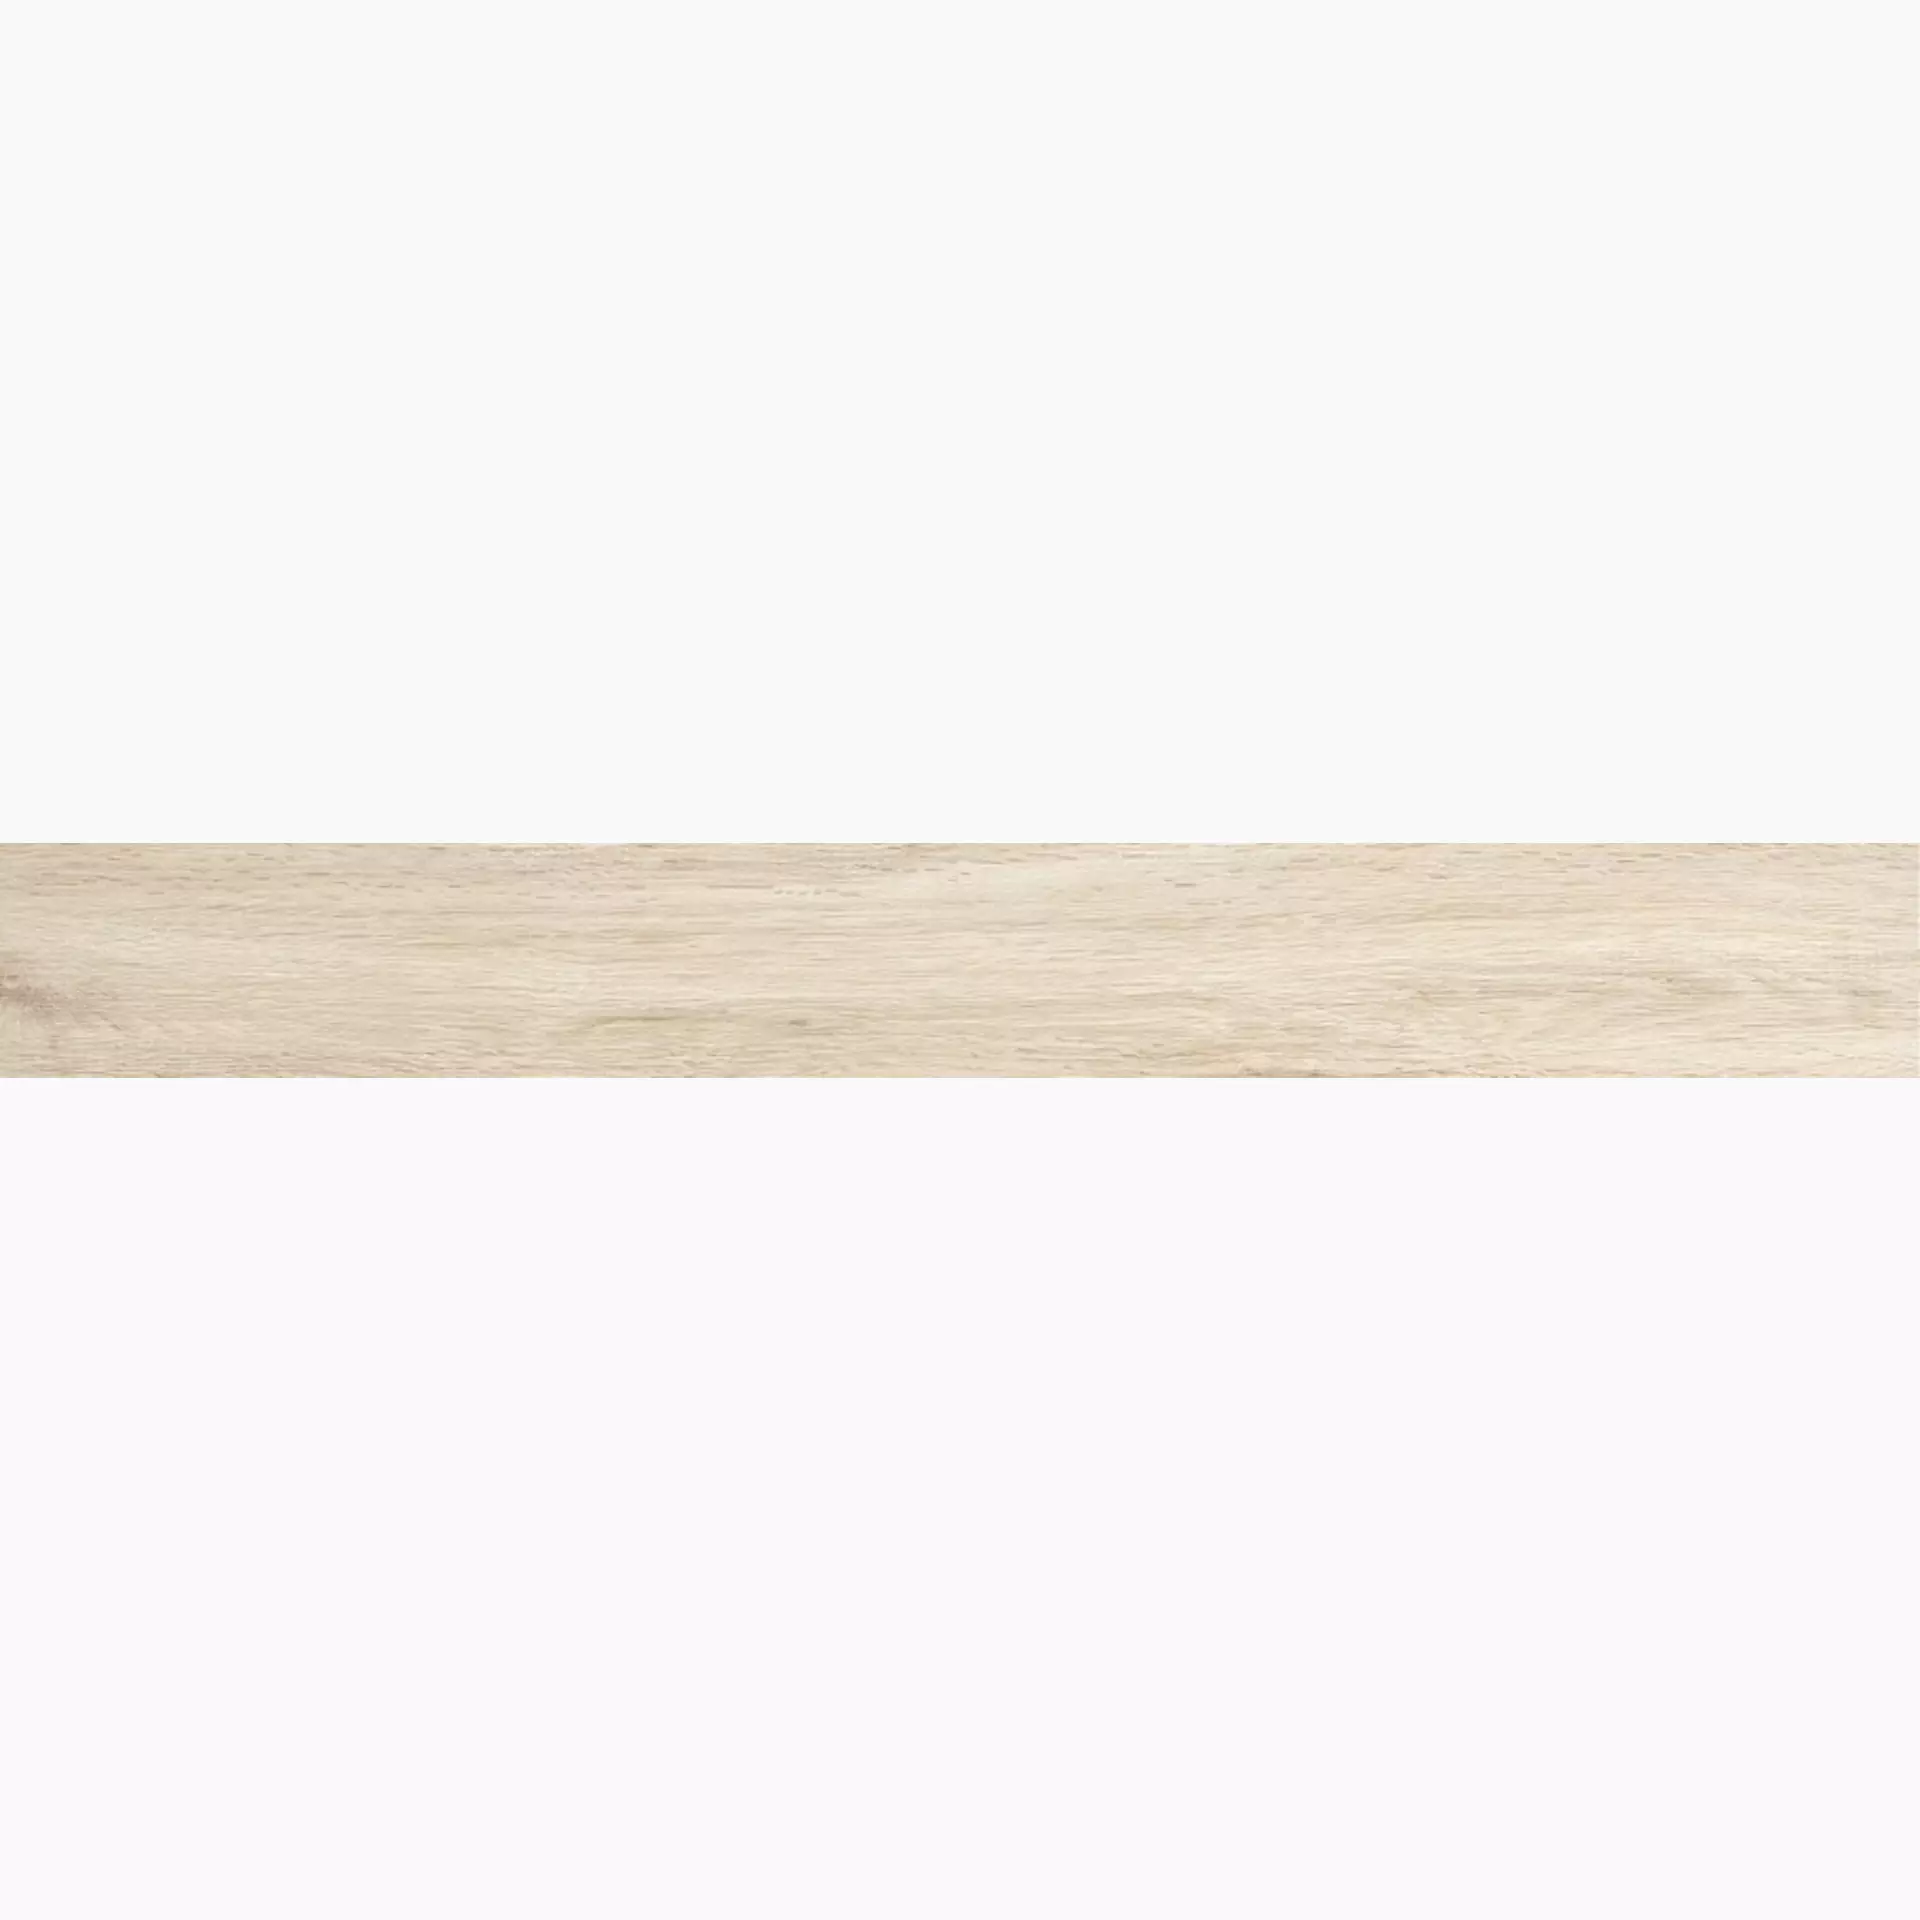 Iris E-Wood White Lappato Vintage 898024 11x90cm 9mm